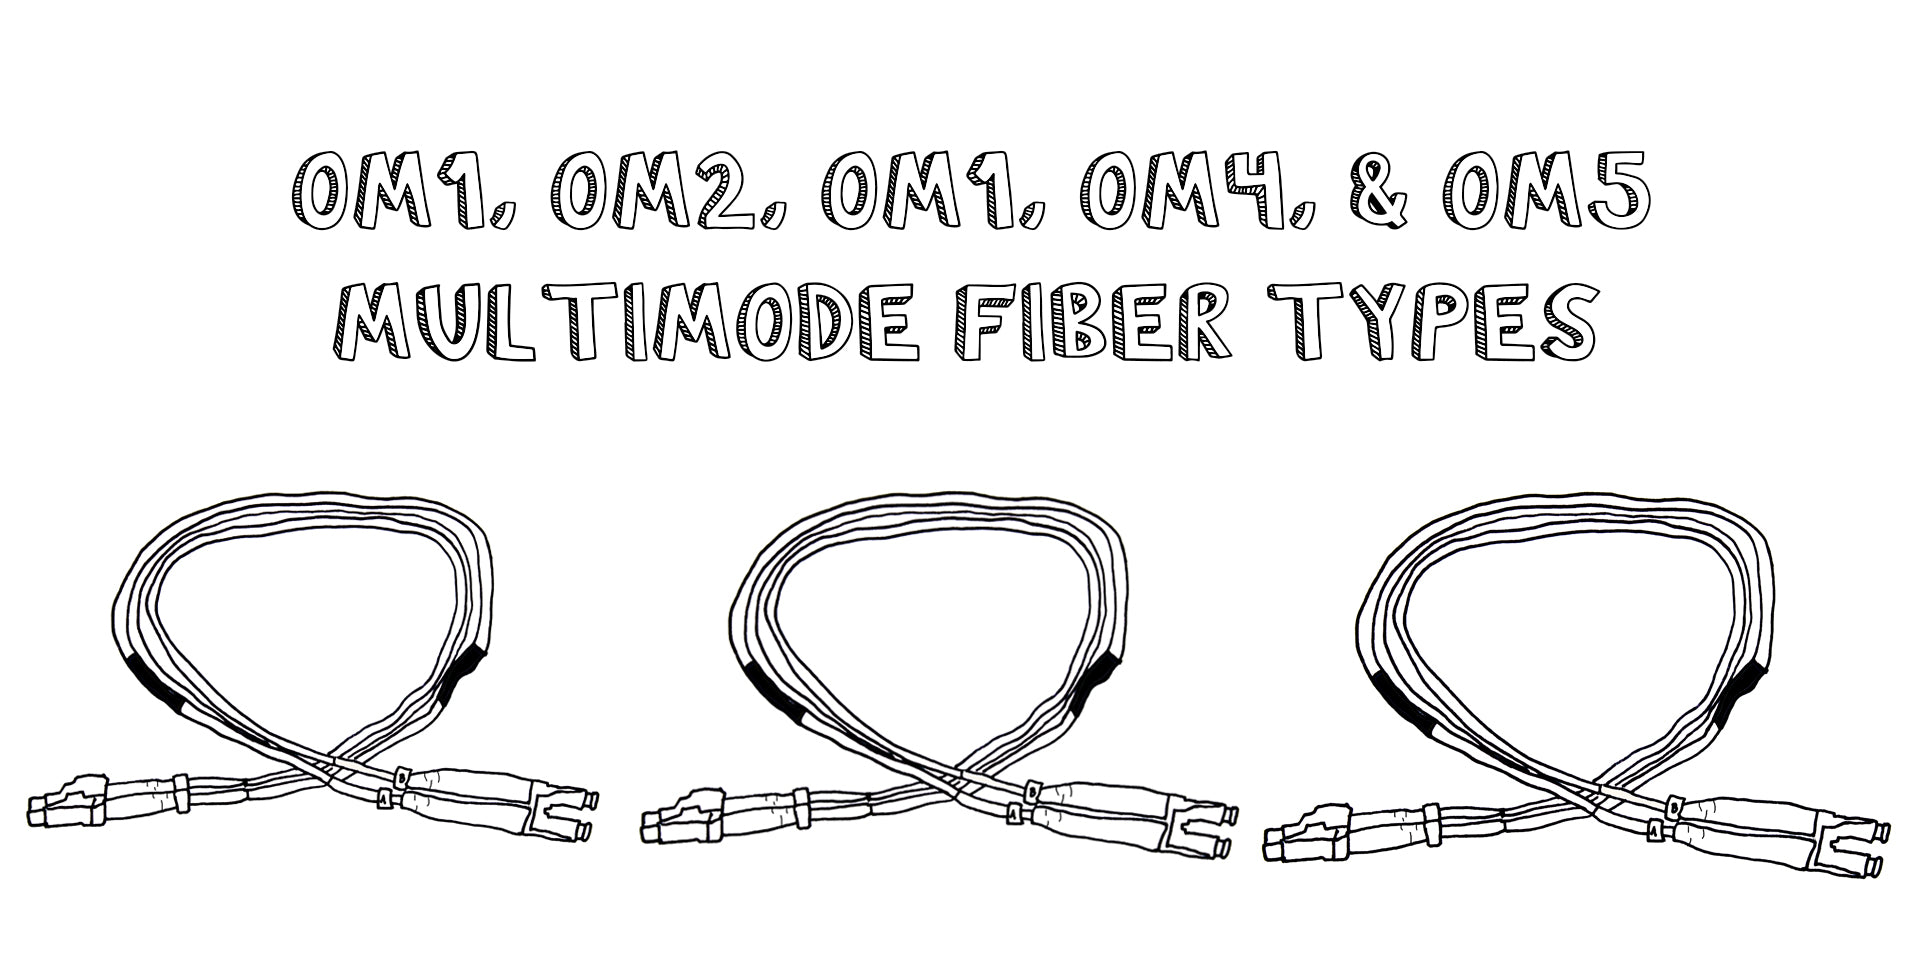 A Guide to Multimode Fiber Types (OM1-OM5)